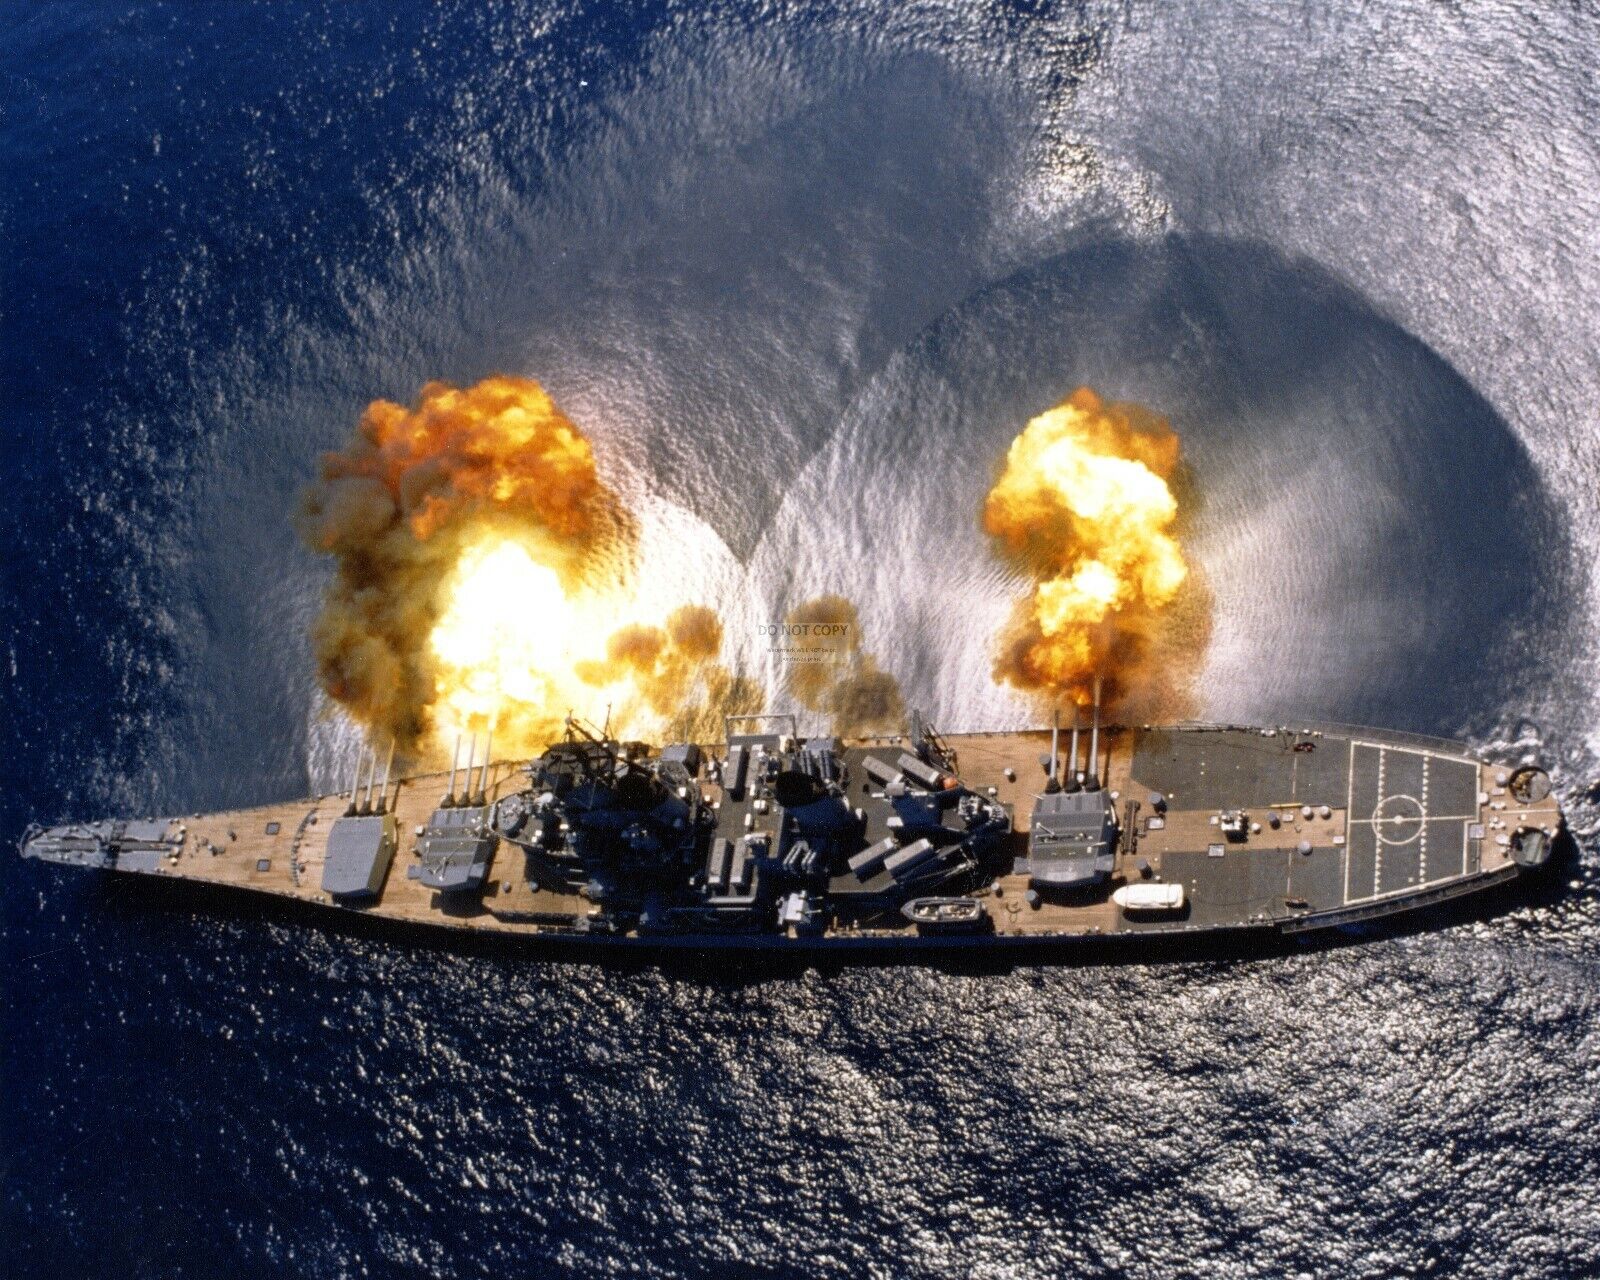 USS IOWA (BB-61) FIRES FULL BROADSIDE OF 9 GUNS FOR EXERCISE 8X10 PHOTO (OP-807)